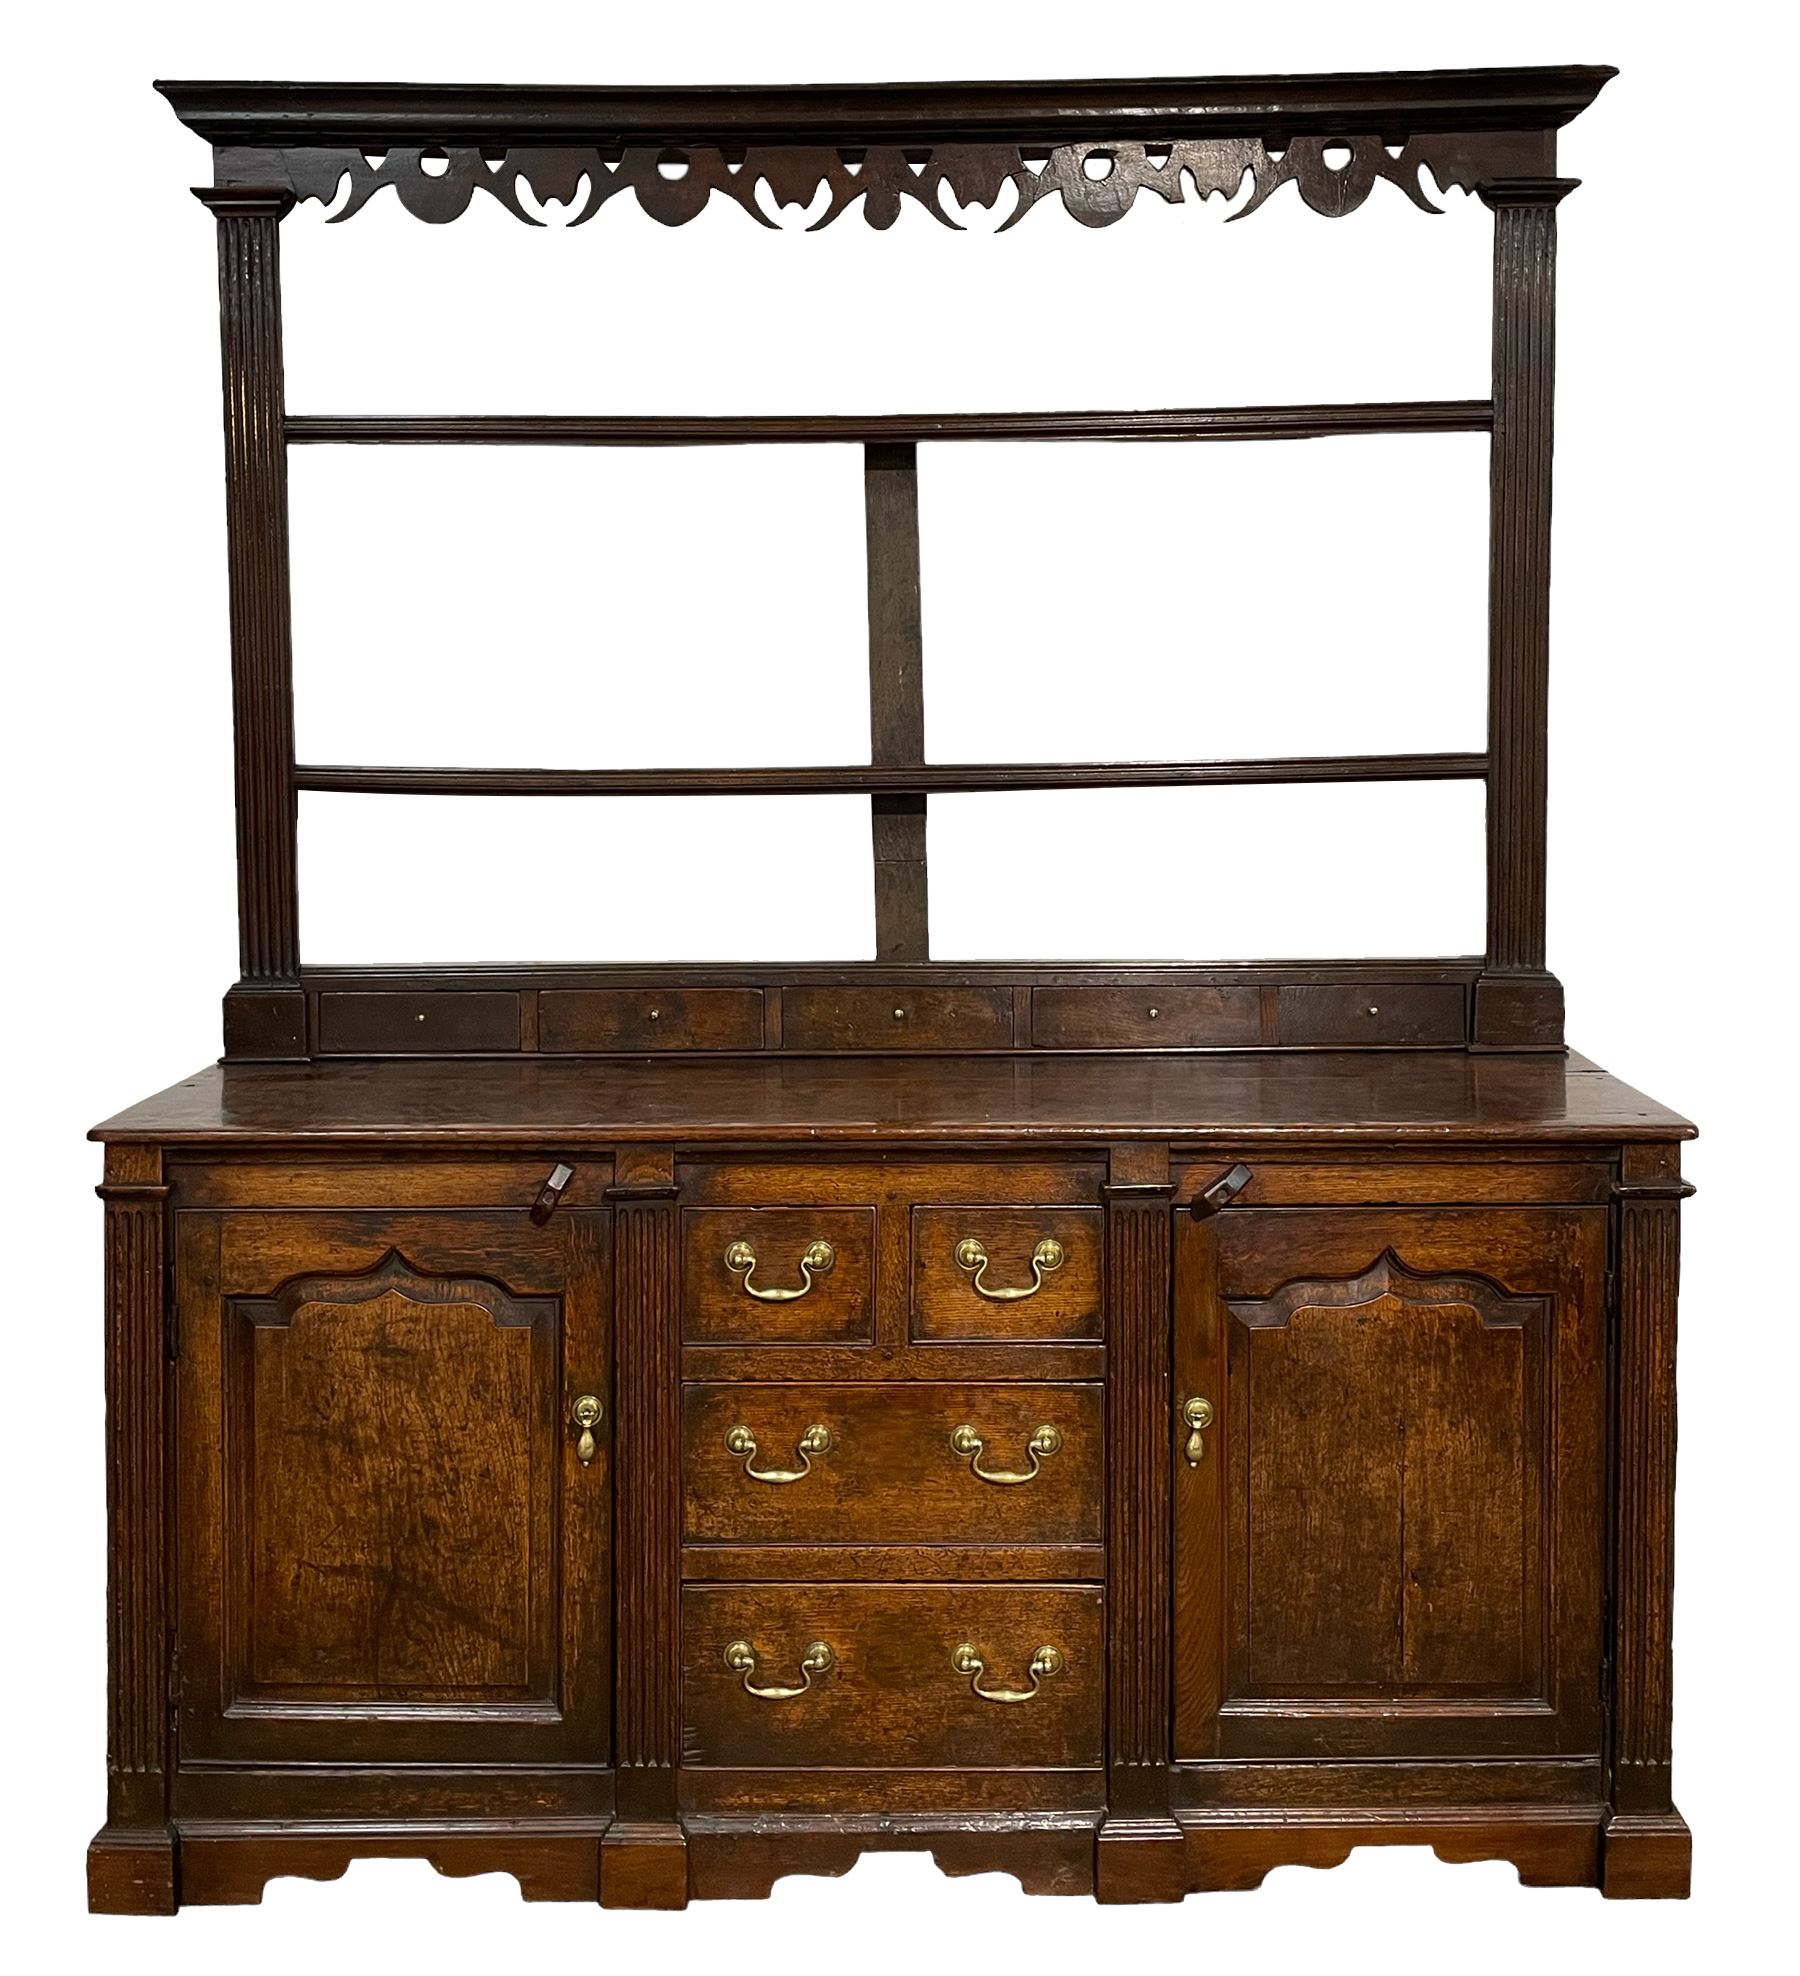 Late 18th century oak dresser and rack